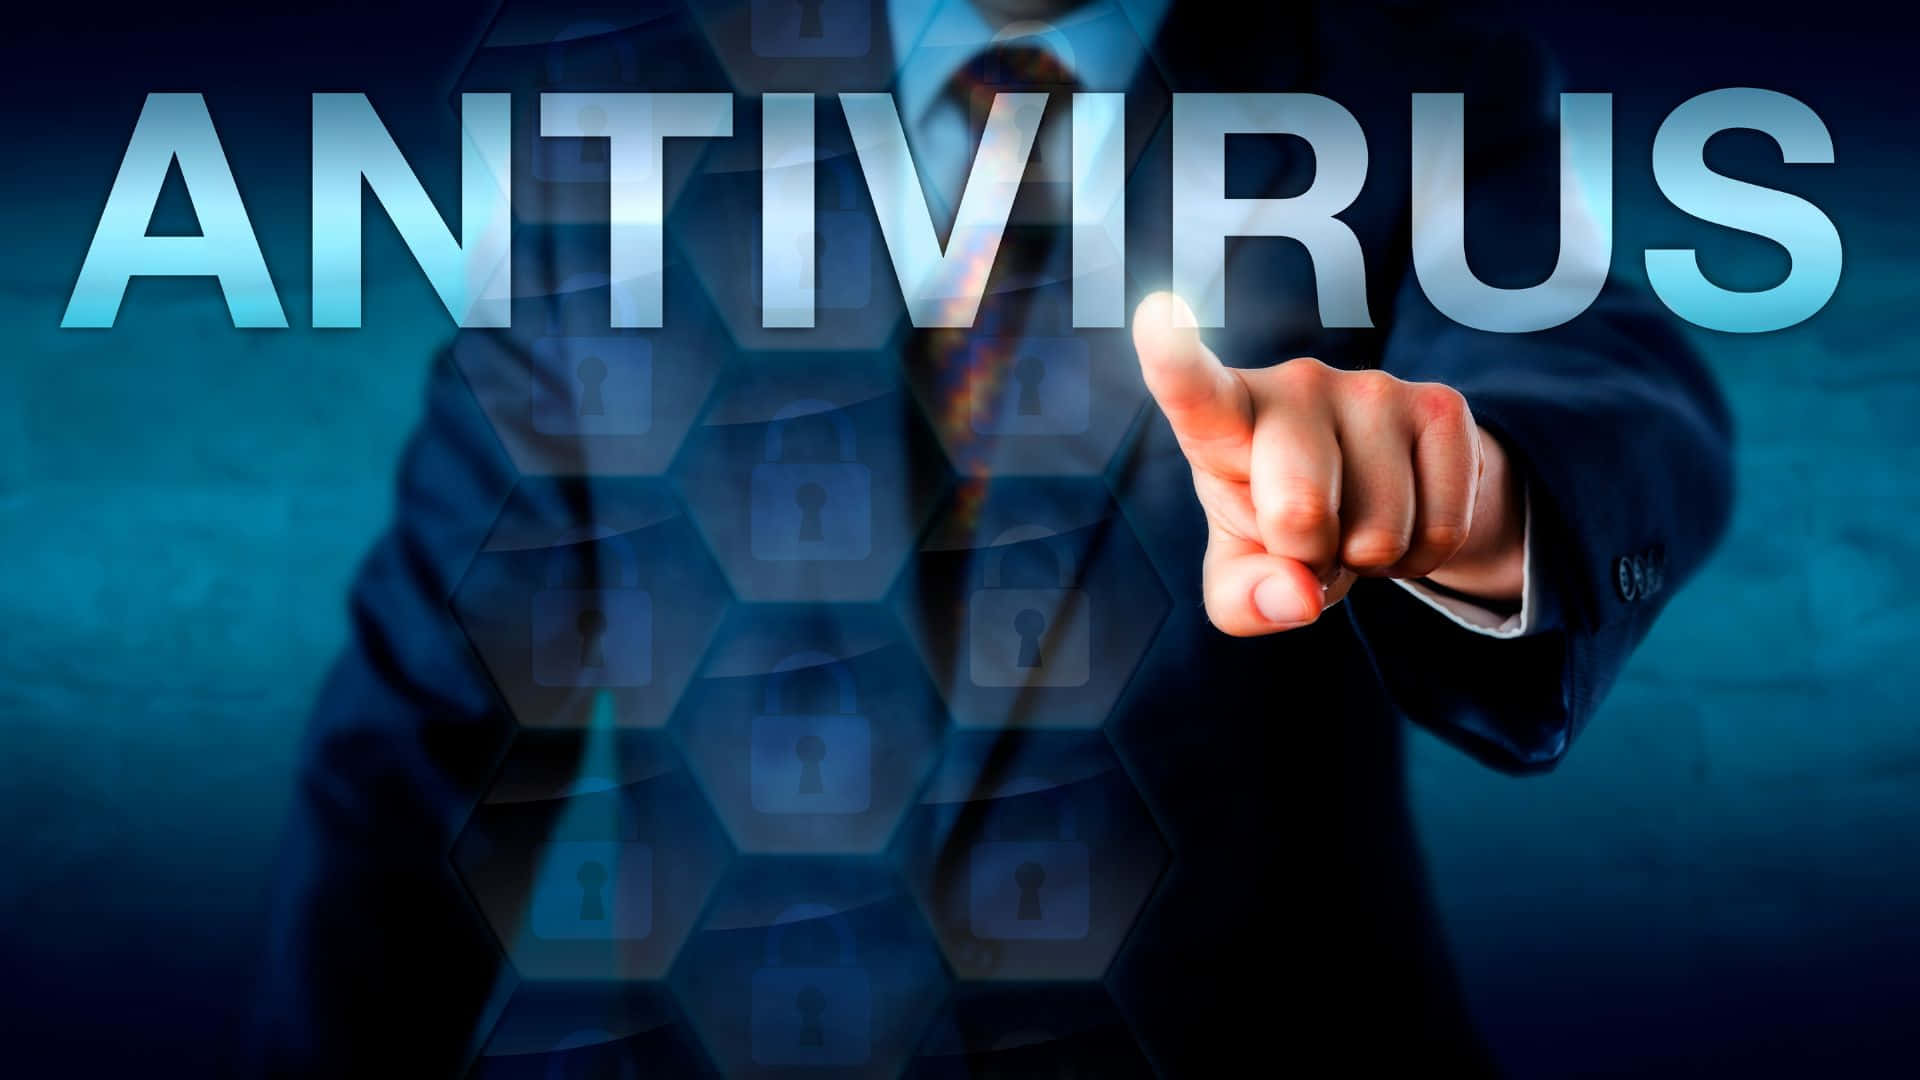 En mand i forretningstøj peger på antivirus-skjold Wallpaper